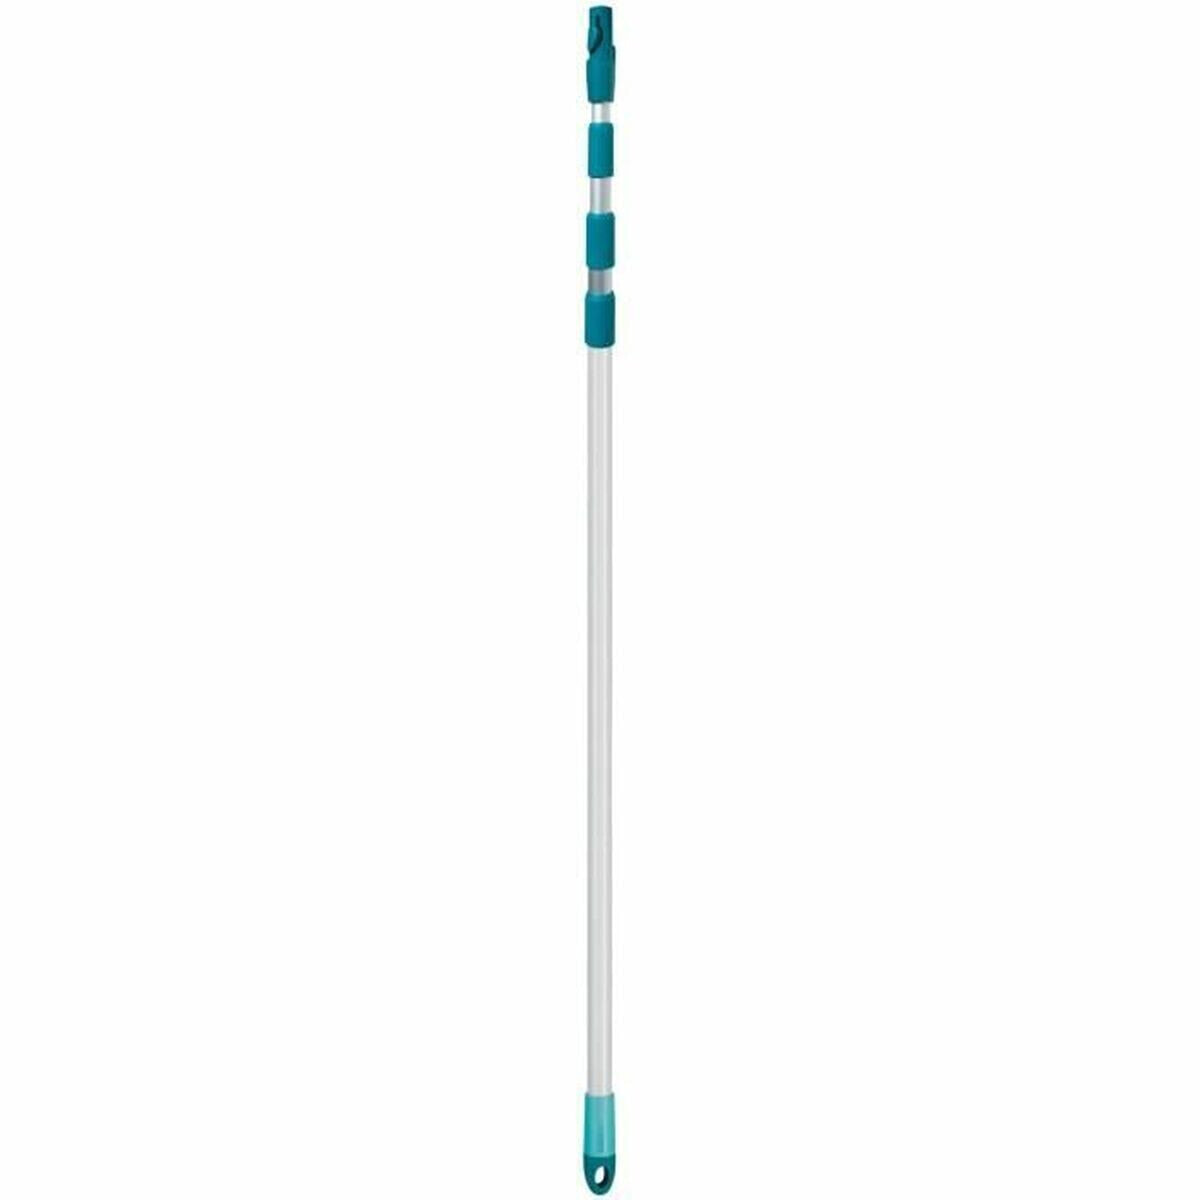 Broom handle Leifheit Blue Metal Extendable